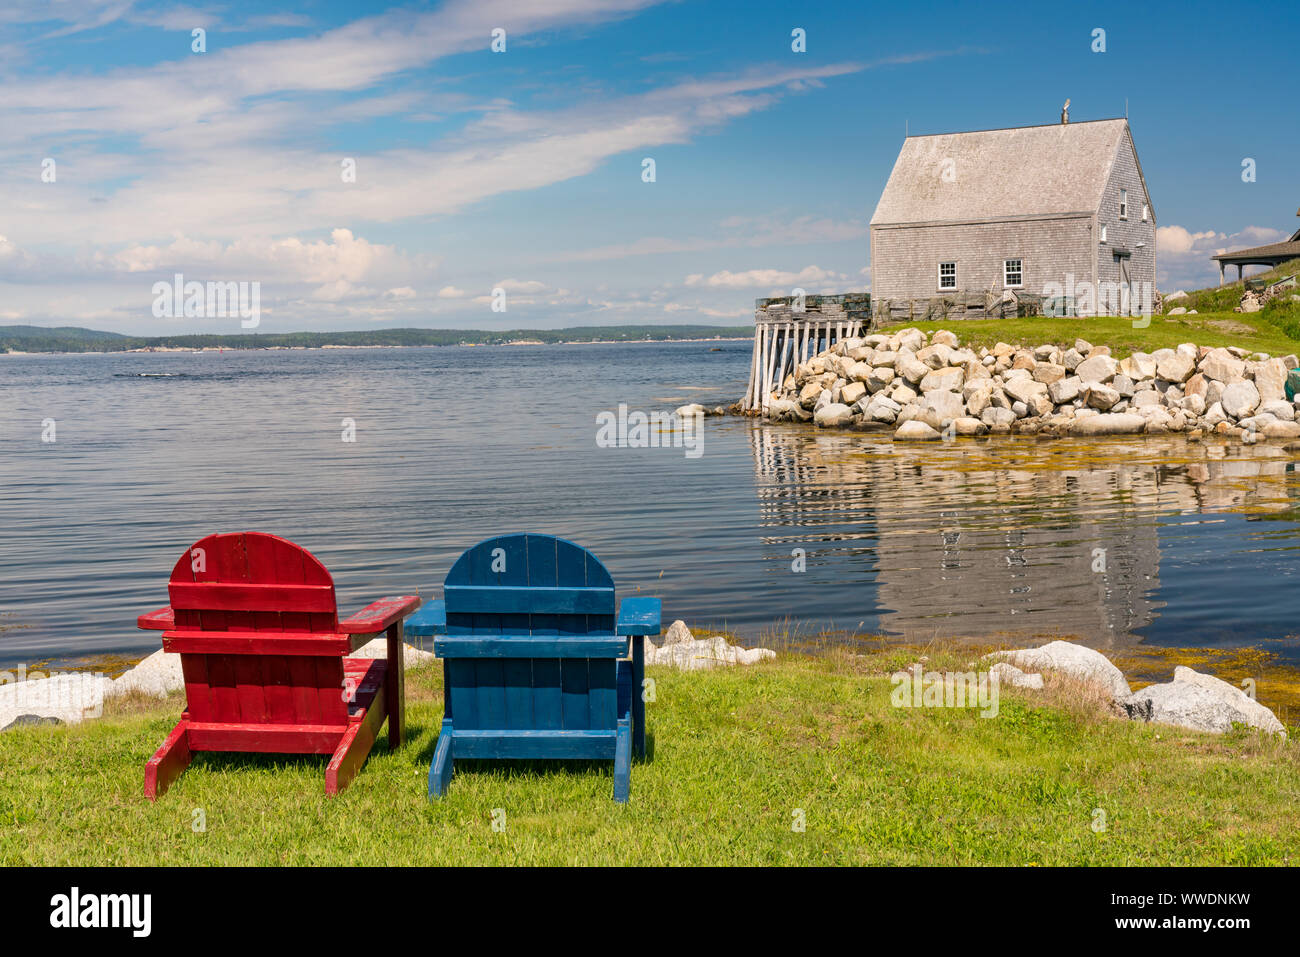 Chaises Adirondack le long de l'océan près de Peggy's Cove, Nova Scotia, Canada Banque D'Images